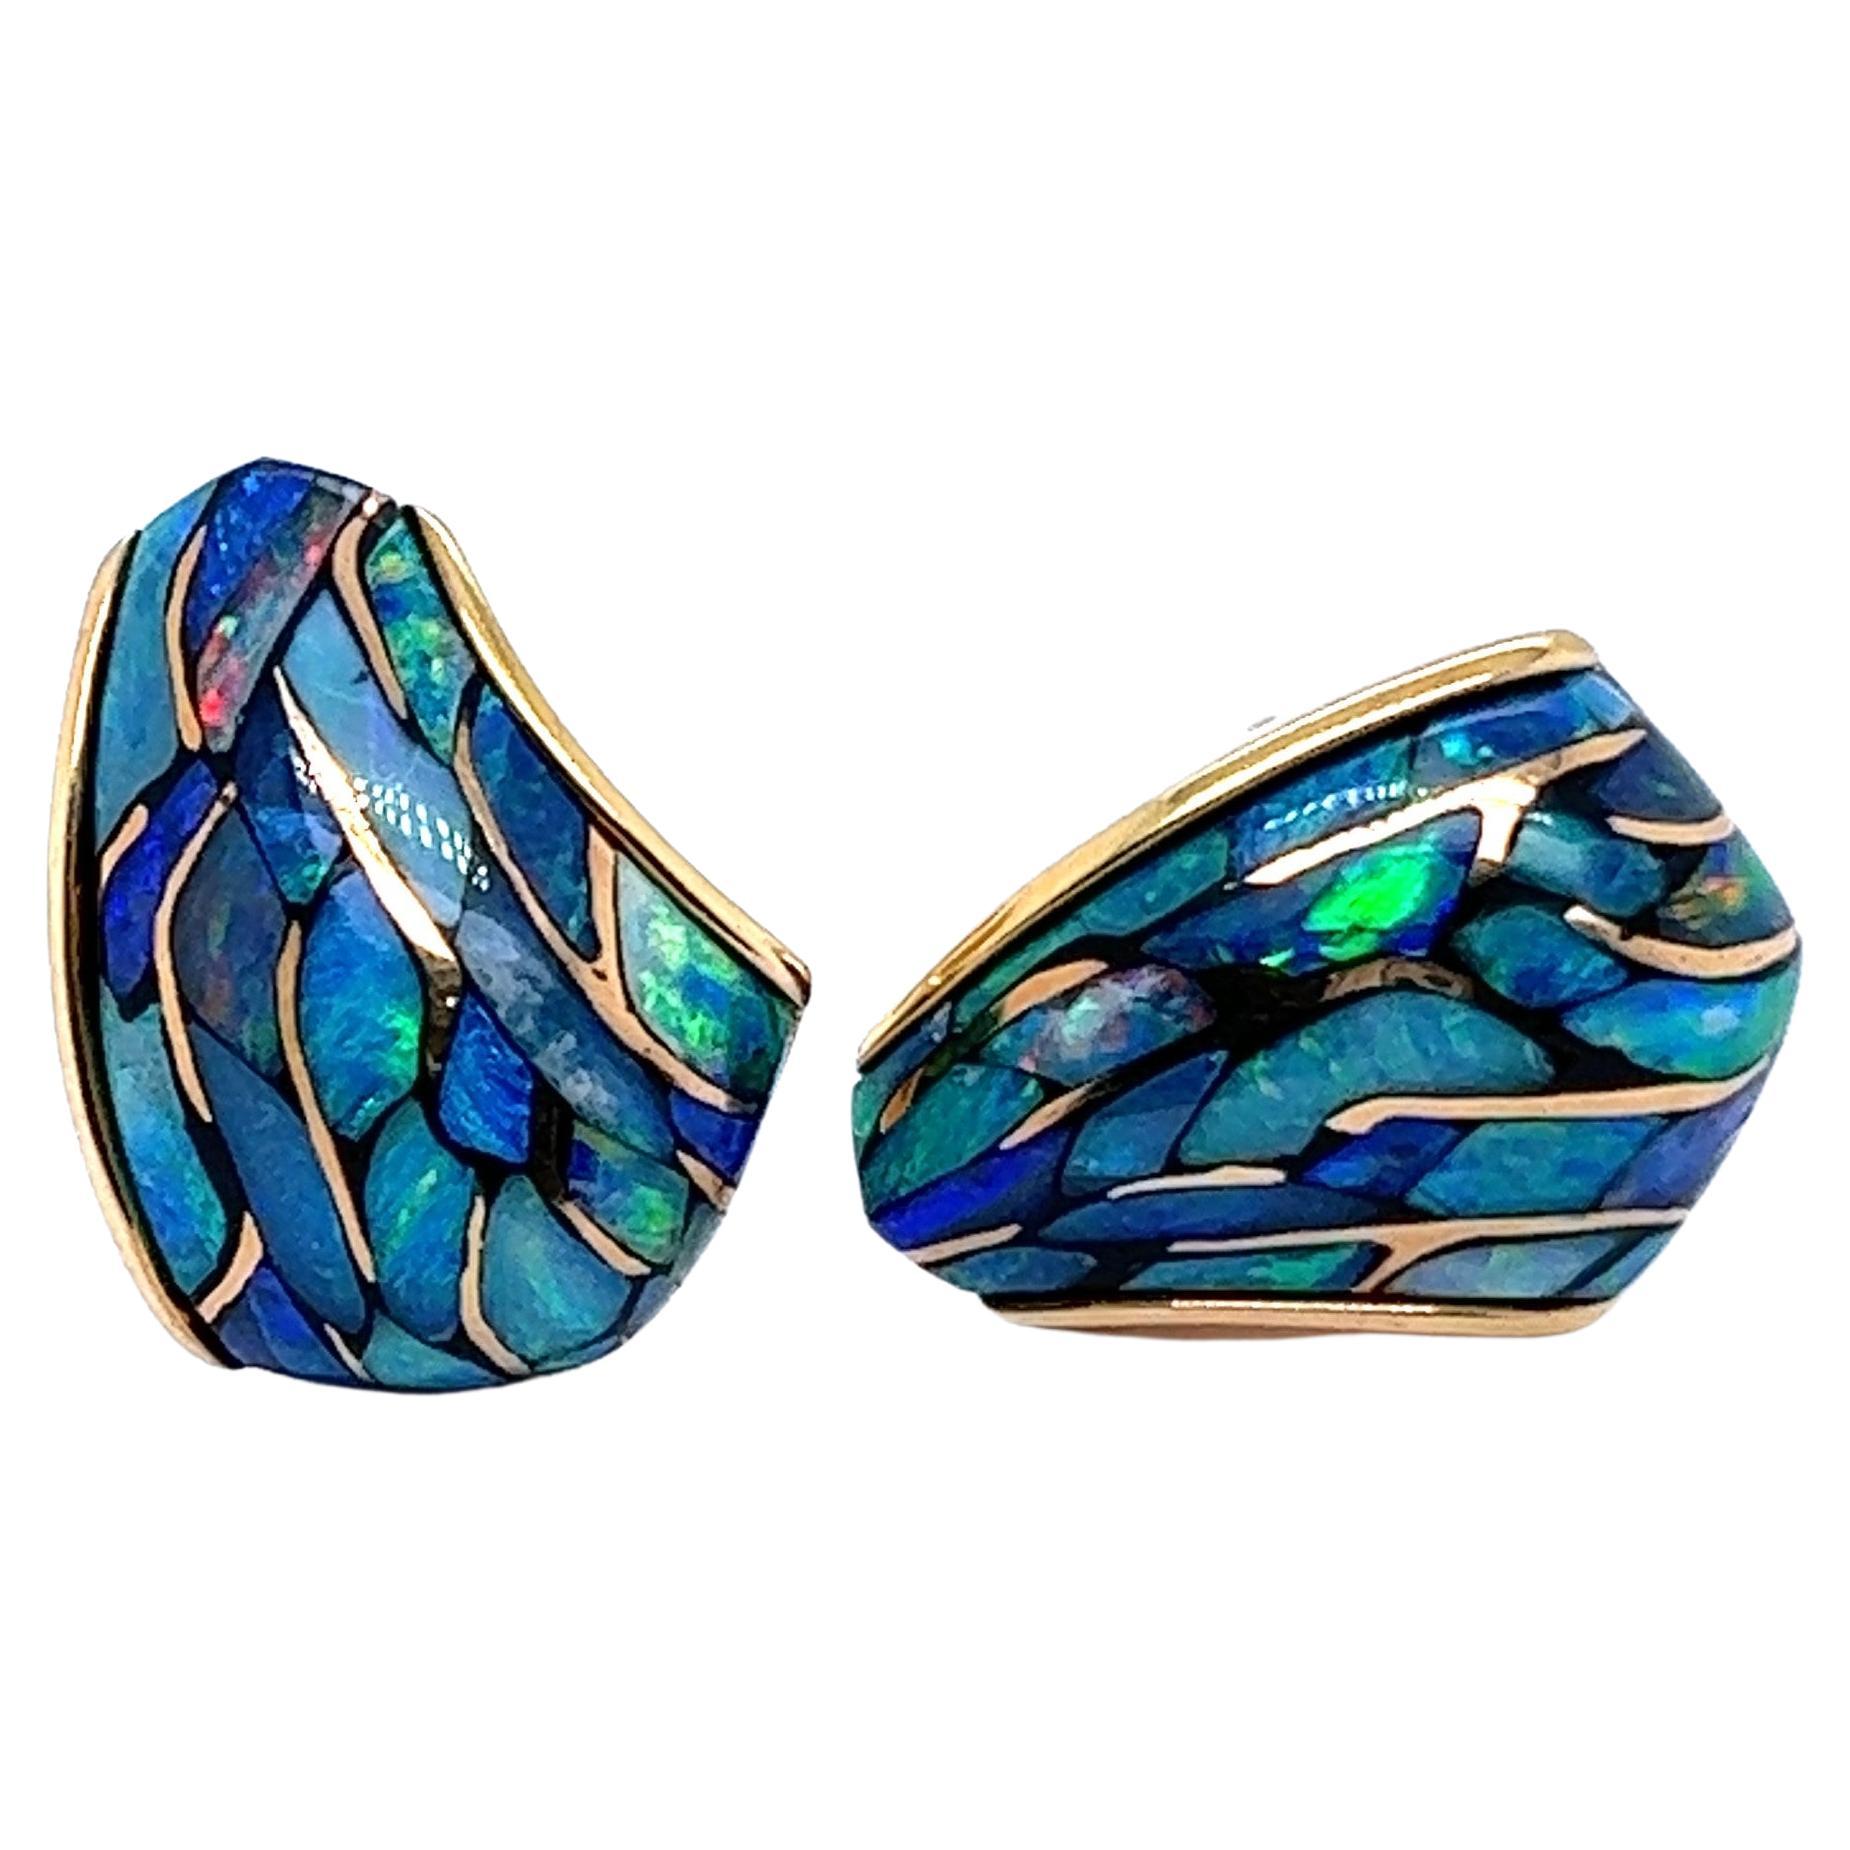 Black Opal Earrings in 18 Karat Rose Gold by Binder